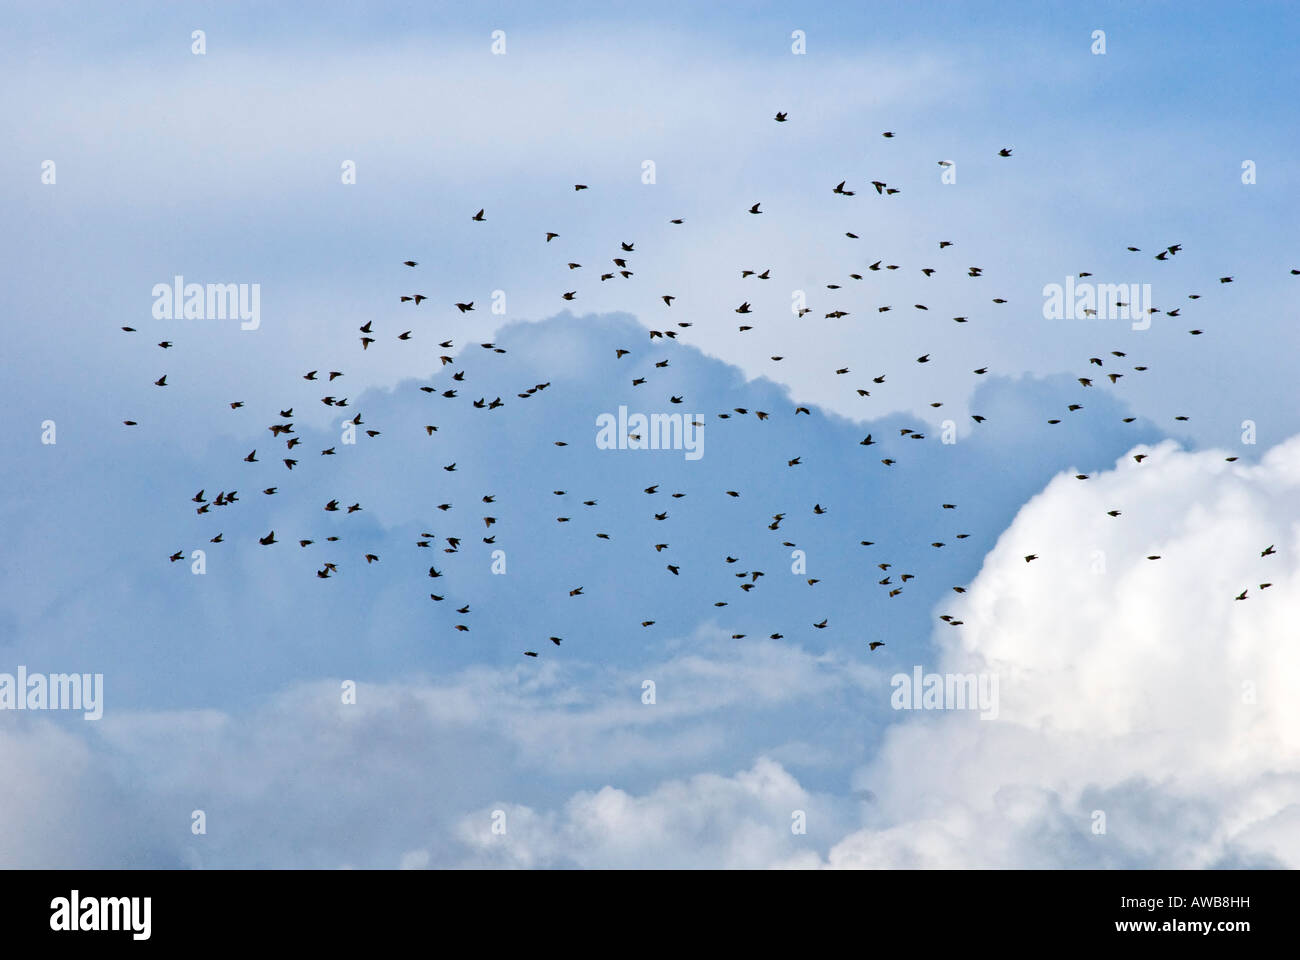 Storm Clouds flocks birds Flying Stock Photo